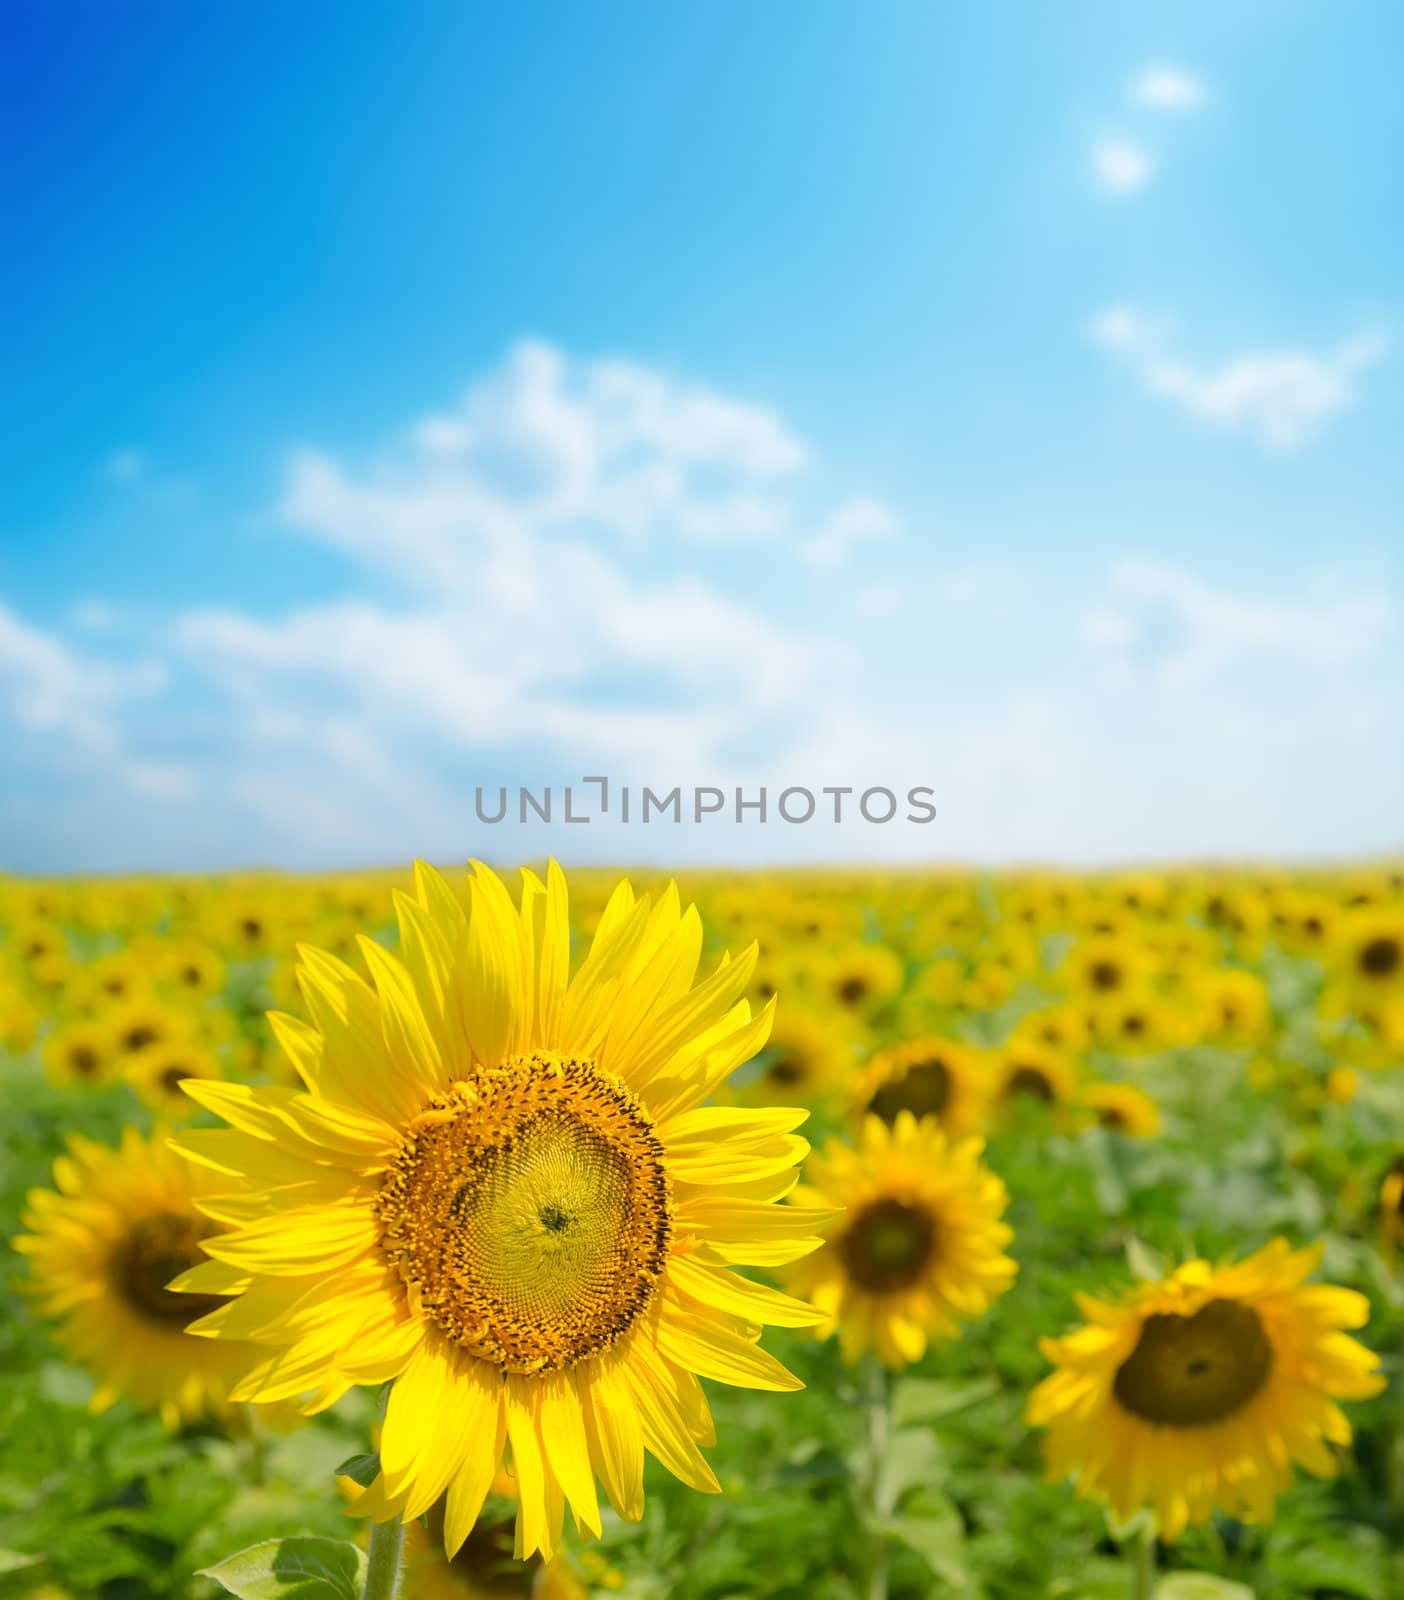 sunflower close up on field. soft focus